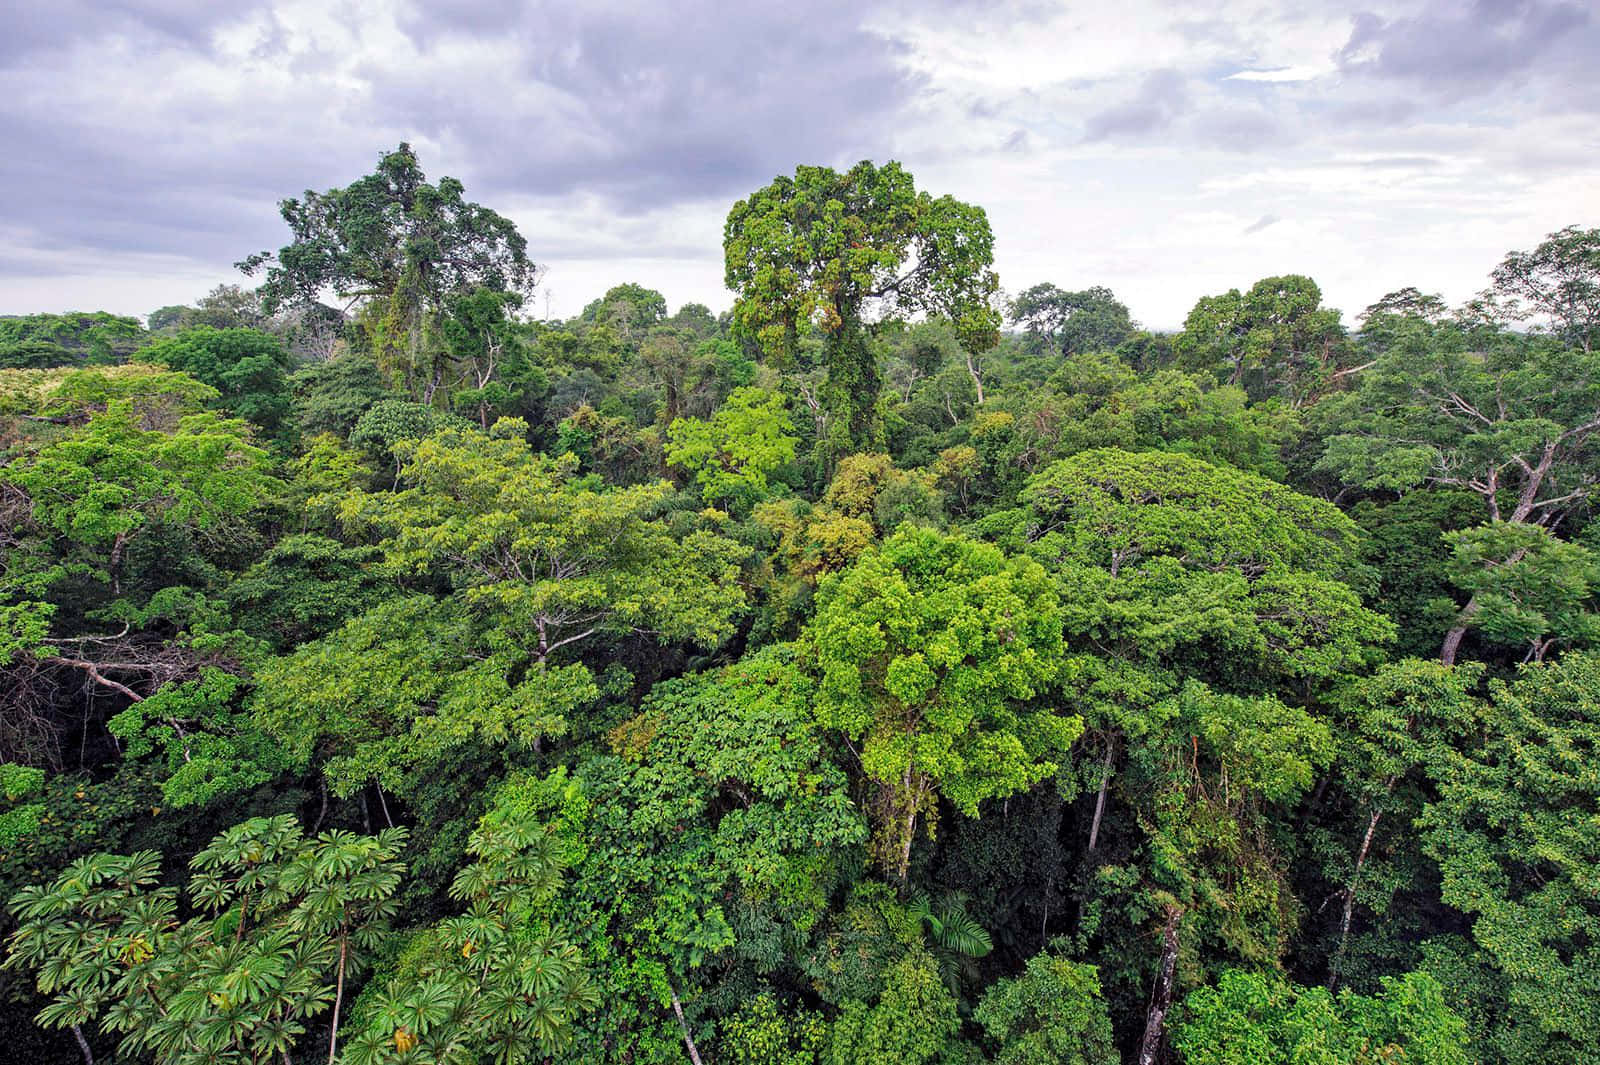 A lush, textured rainforest providing a captivating refuge